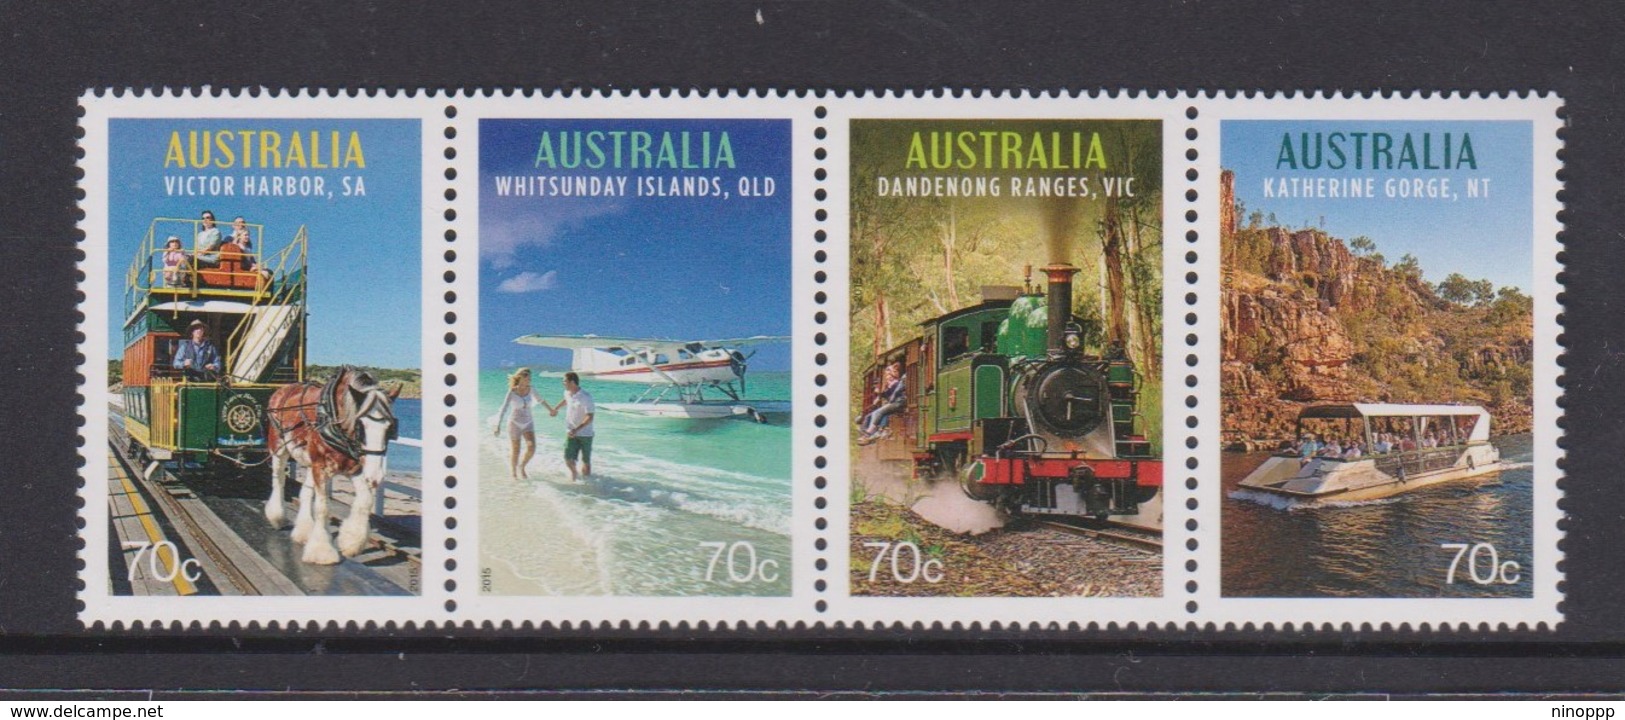 Australia ASC 3280-3283 2015 Tourist Transport,mint Never Hinged - Mint Stamps